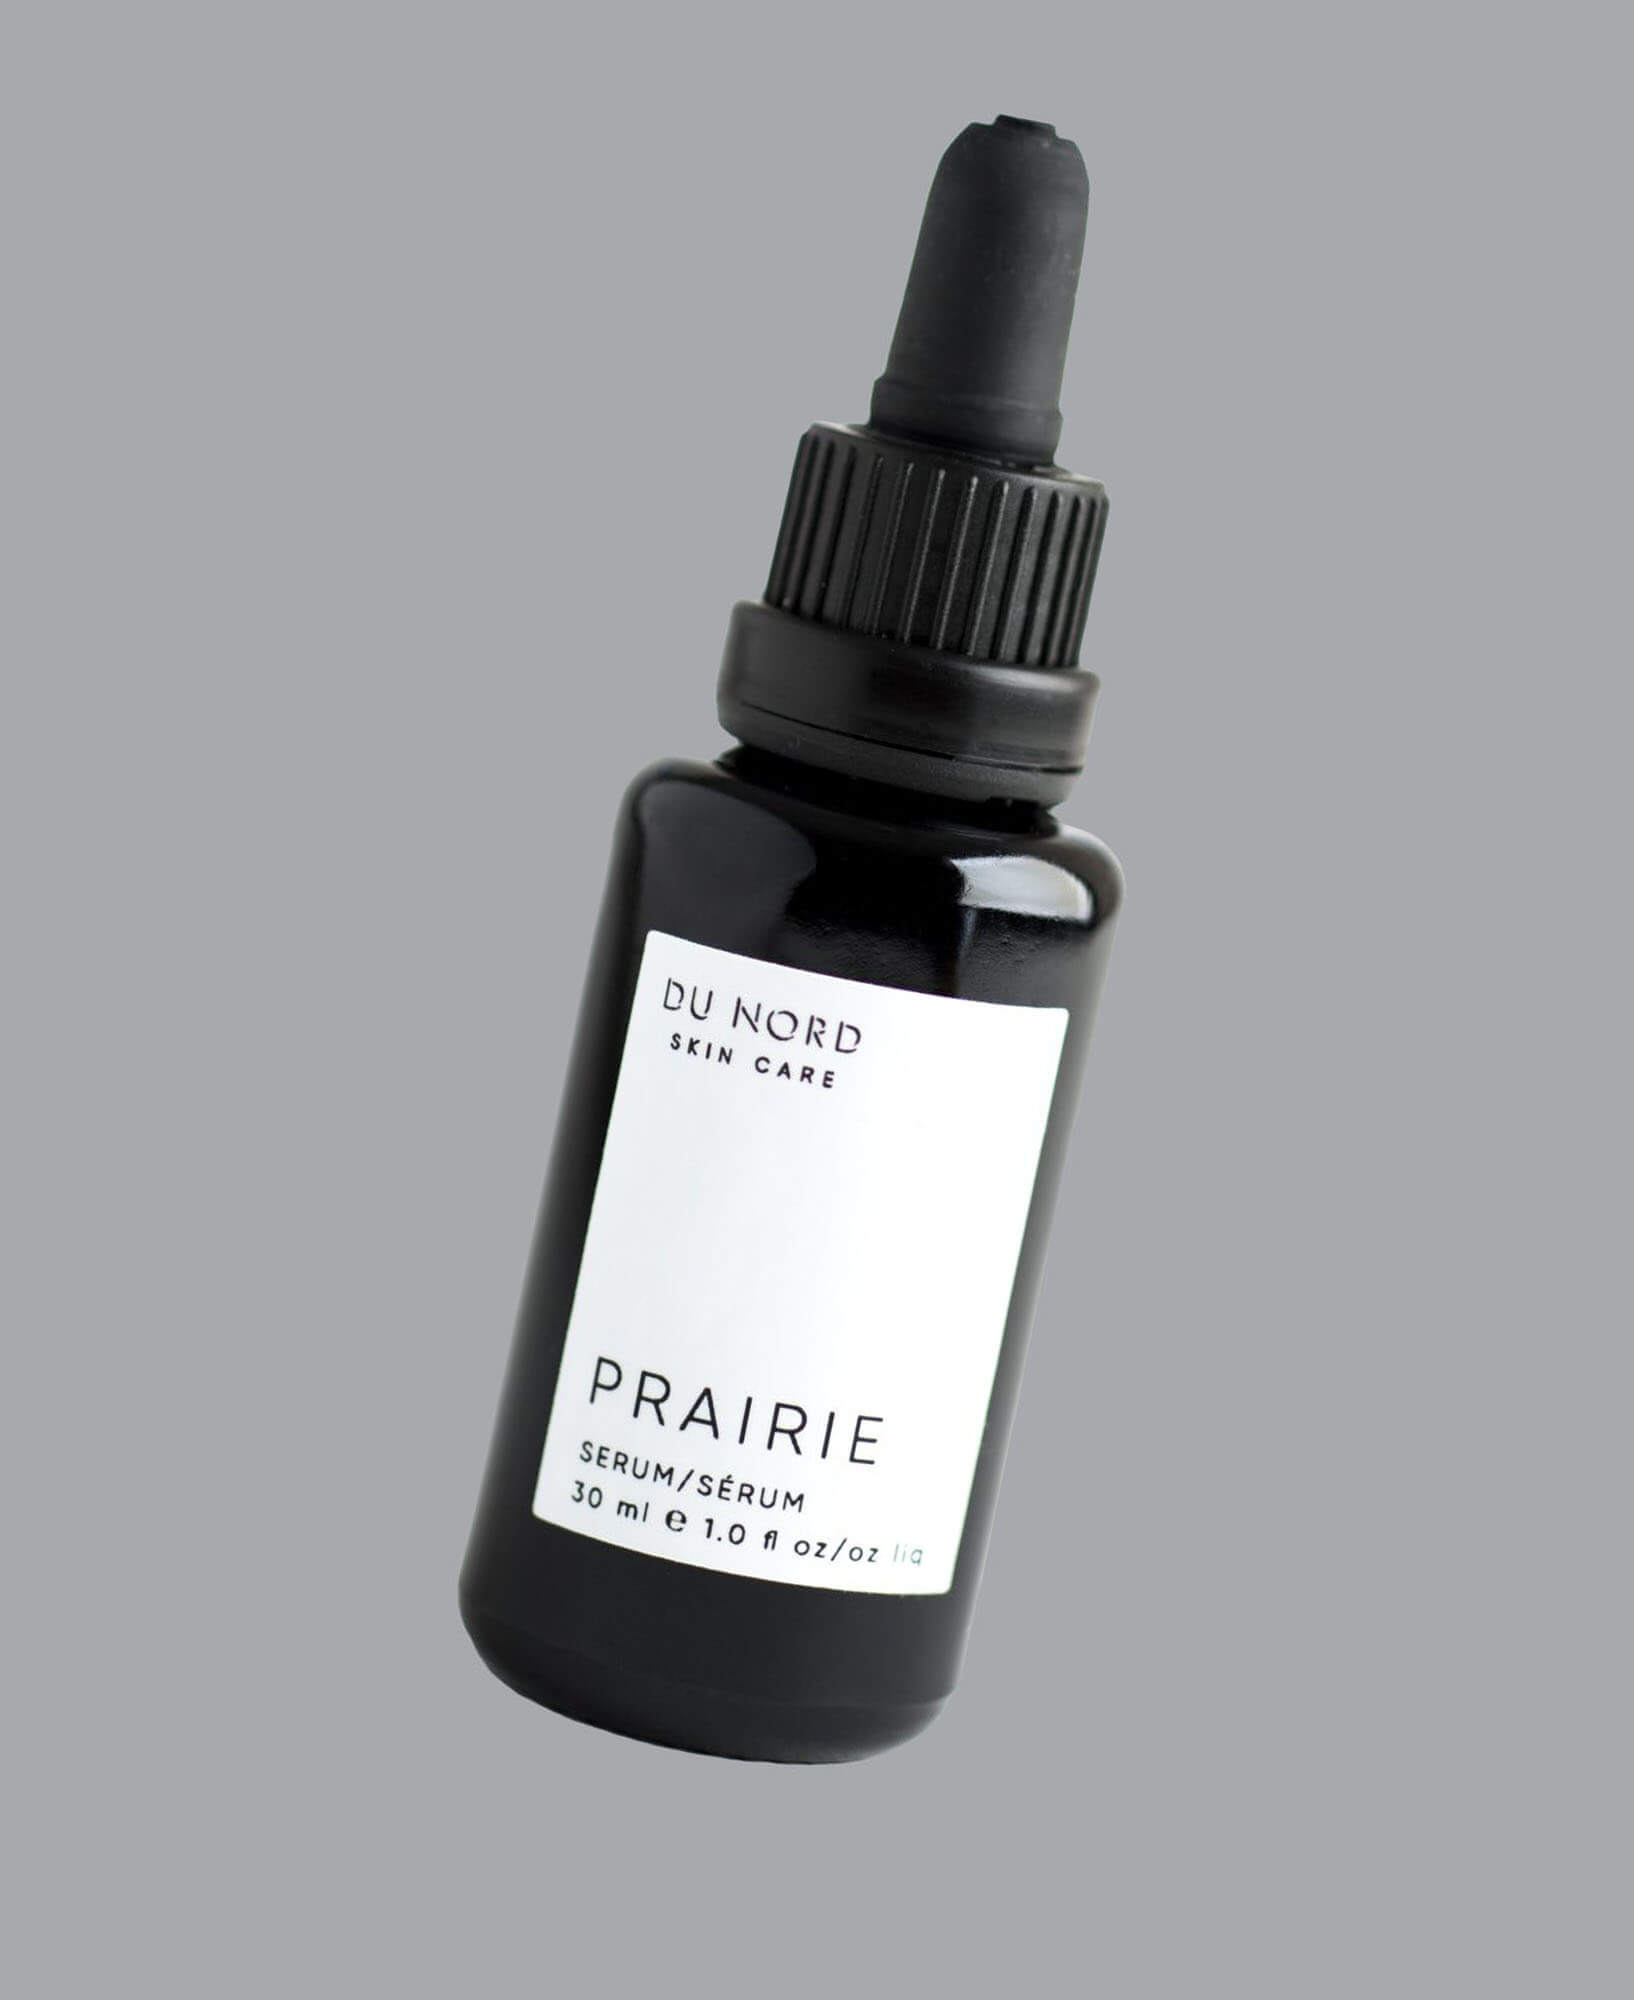 Oat Cosmetics product photo of DU-NORD Prairie Serum.